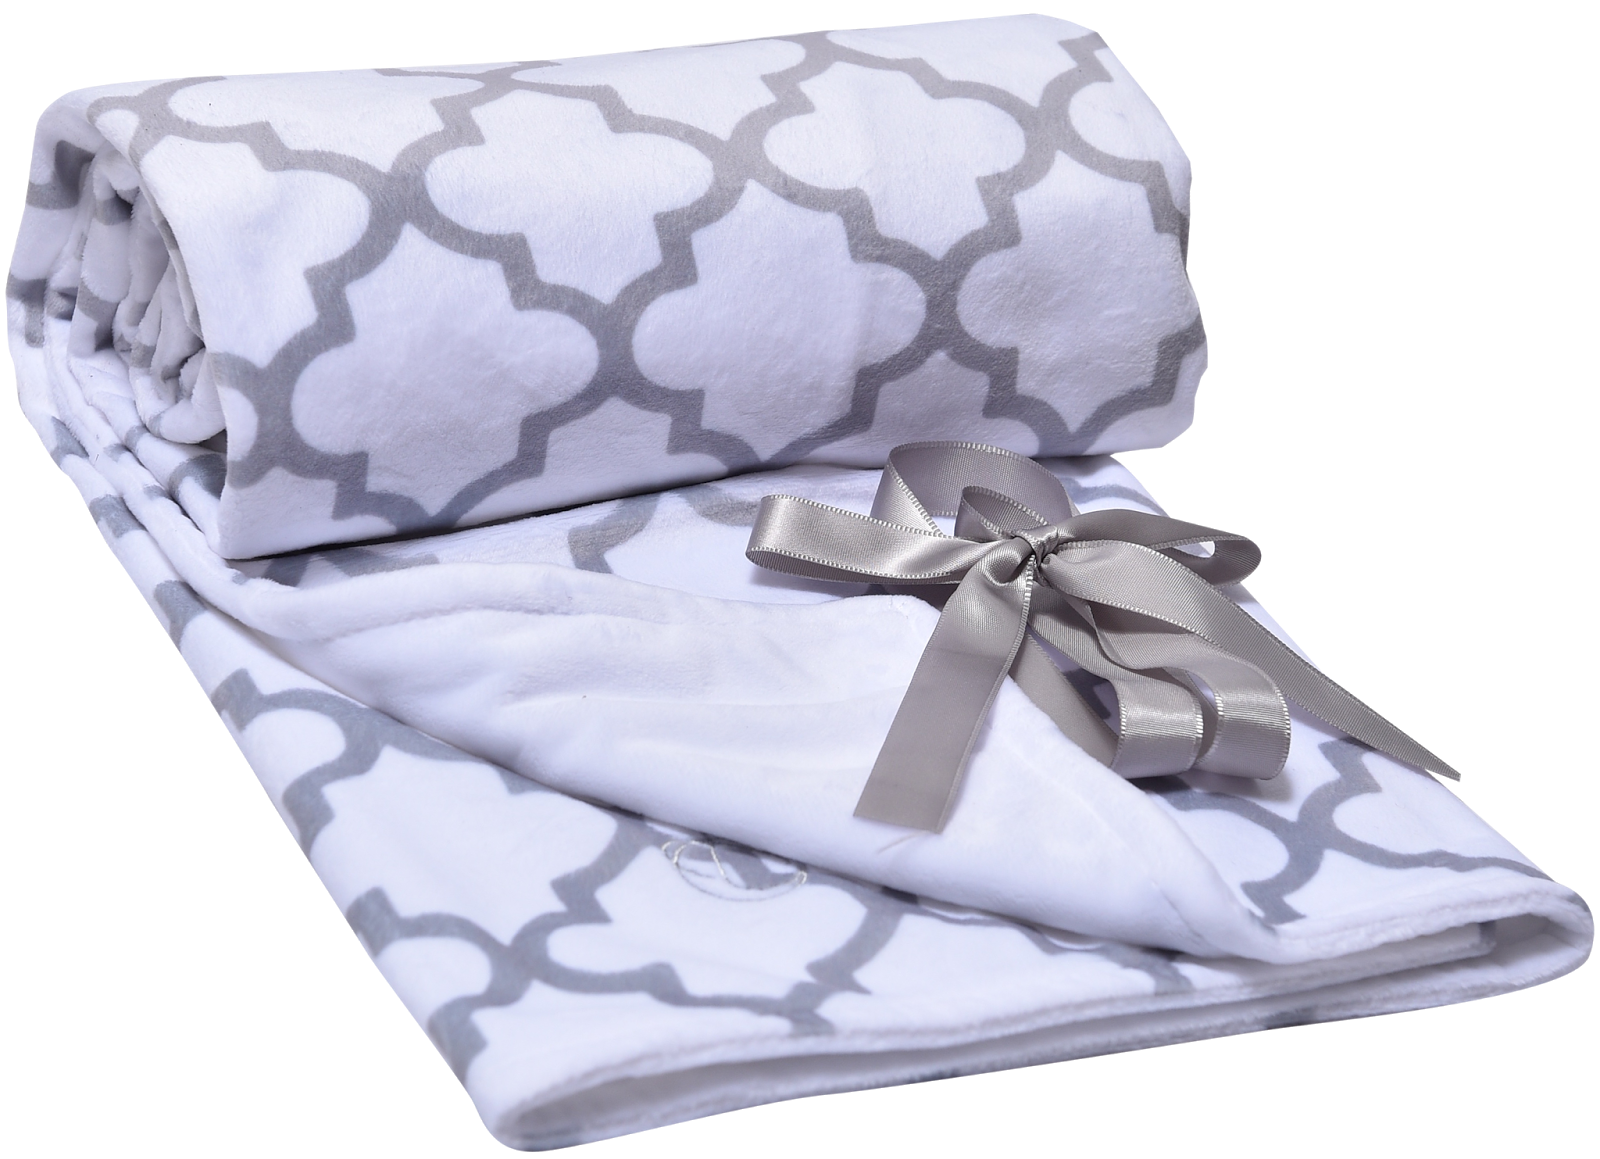 Одеяло. Подушки одеяла текстиль. Одеяло в пододеяльник. Одеяло на прозрачном фоне. Одеяло текстиль купить